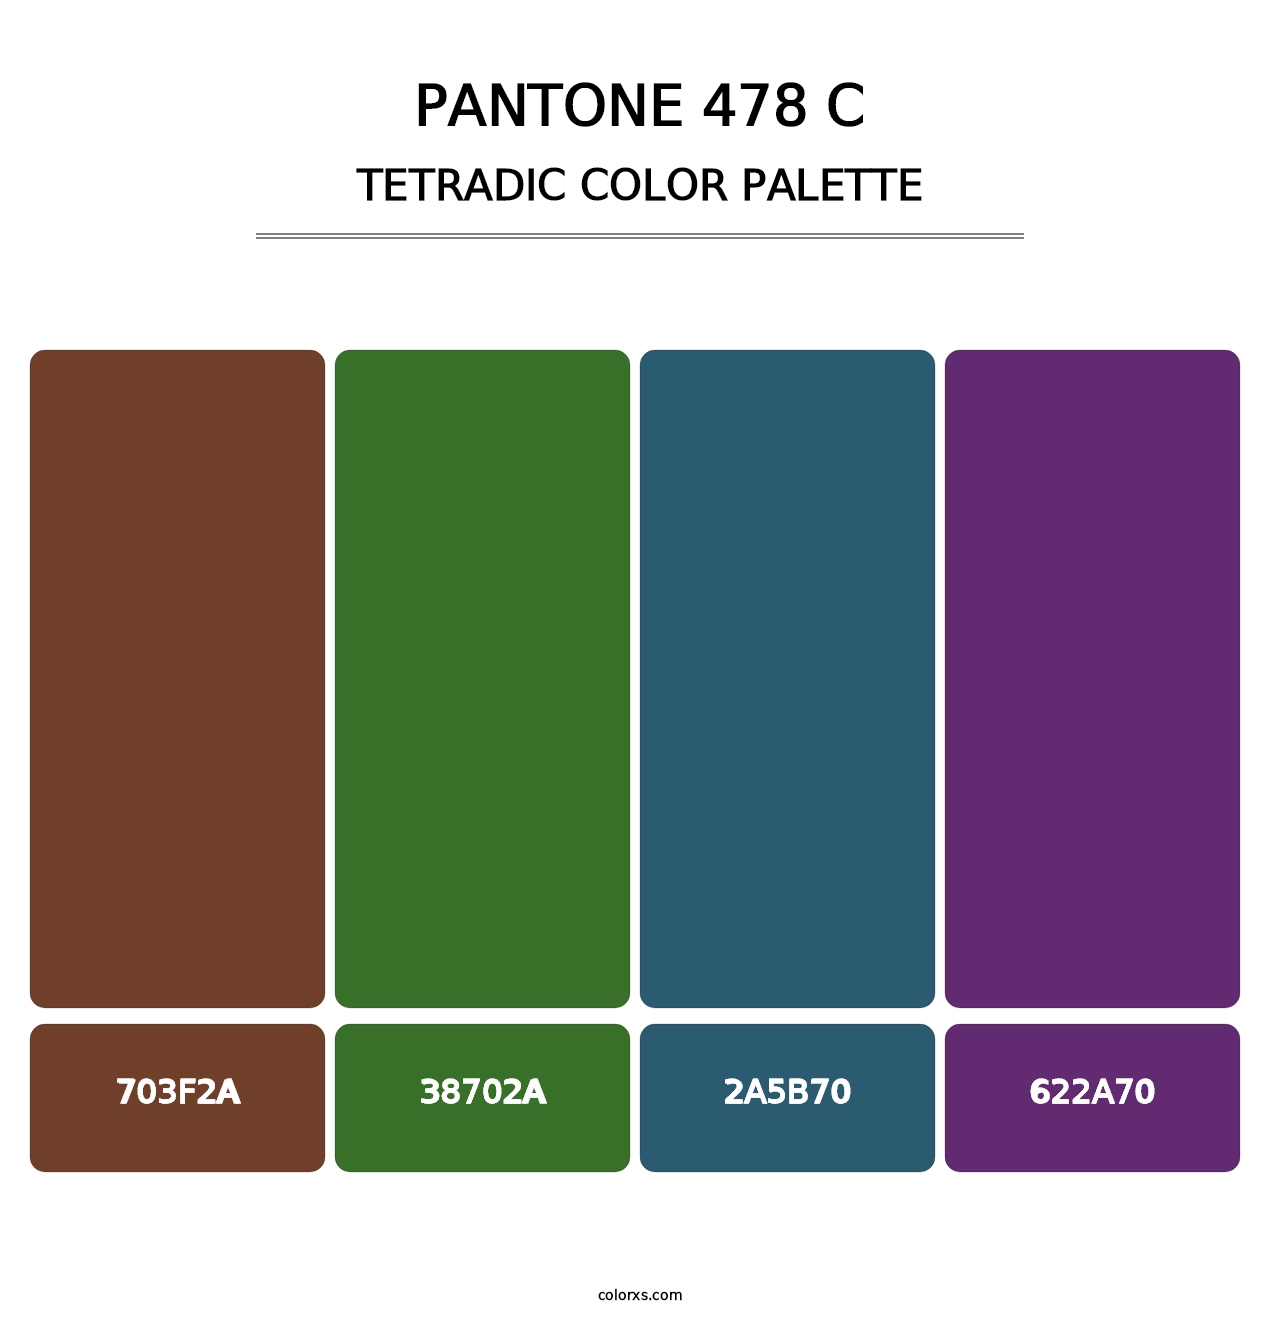 PANTONE 478 C - Tetradic Color Palette